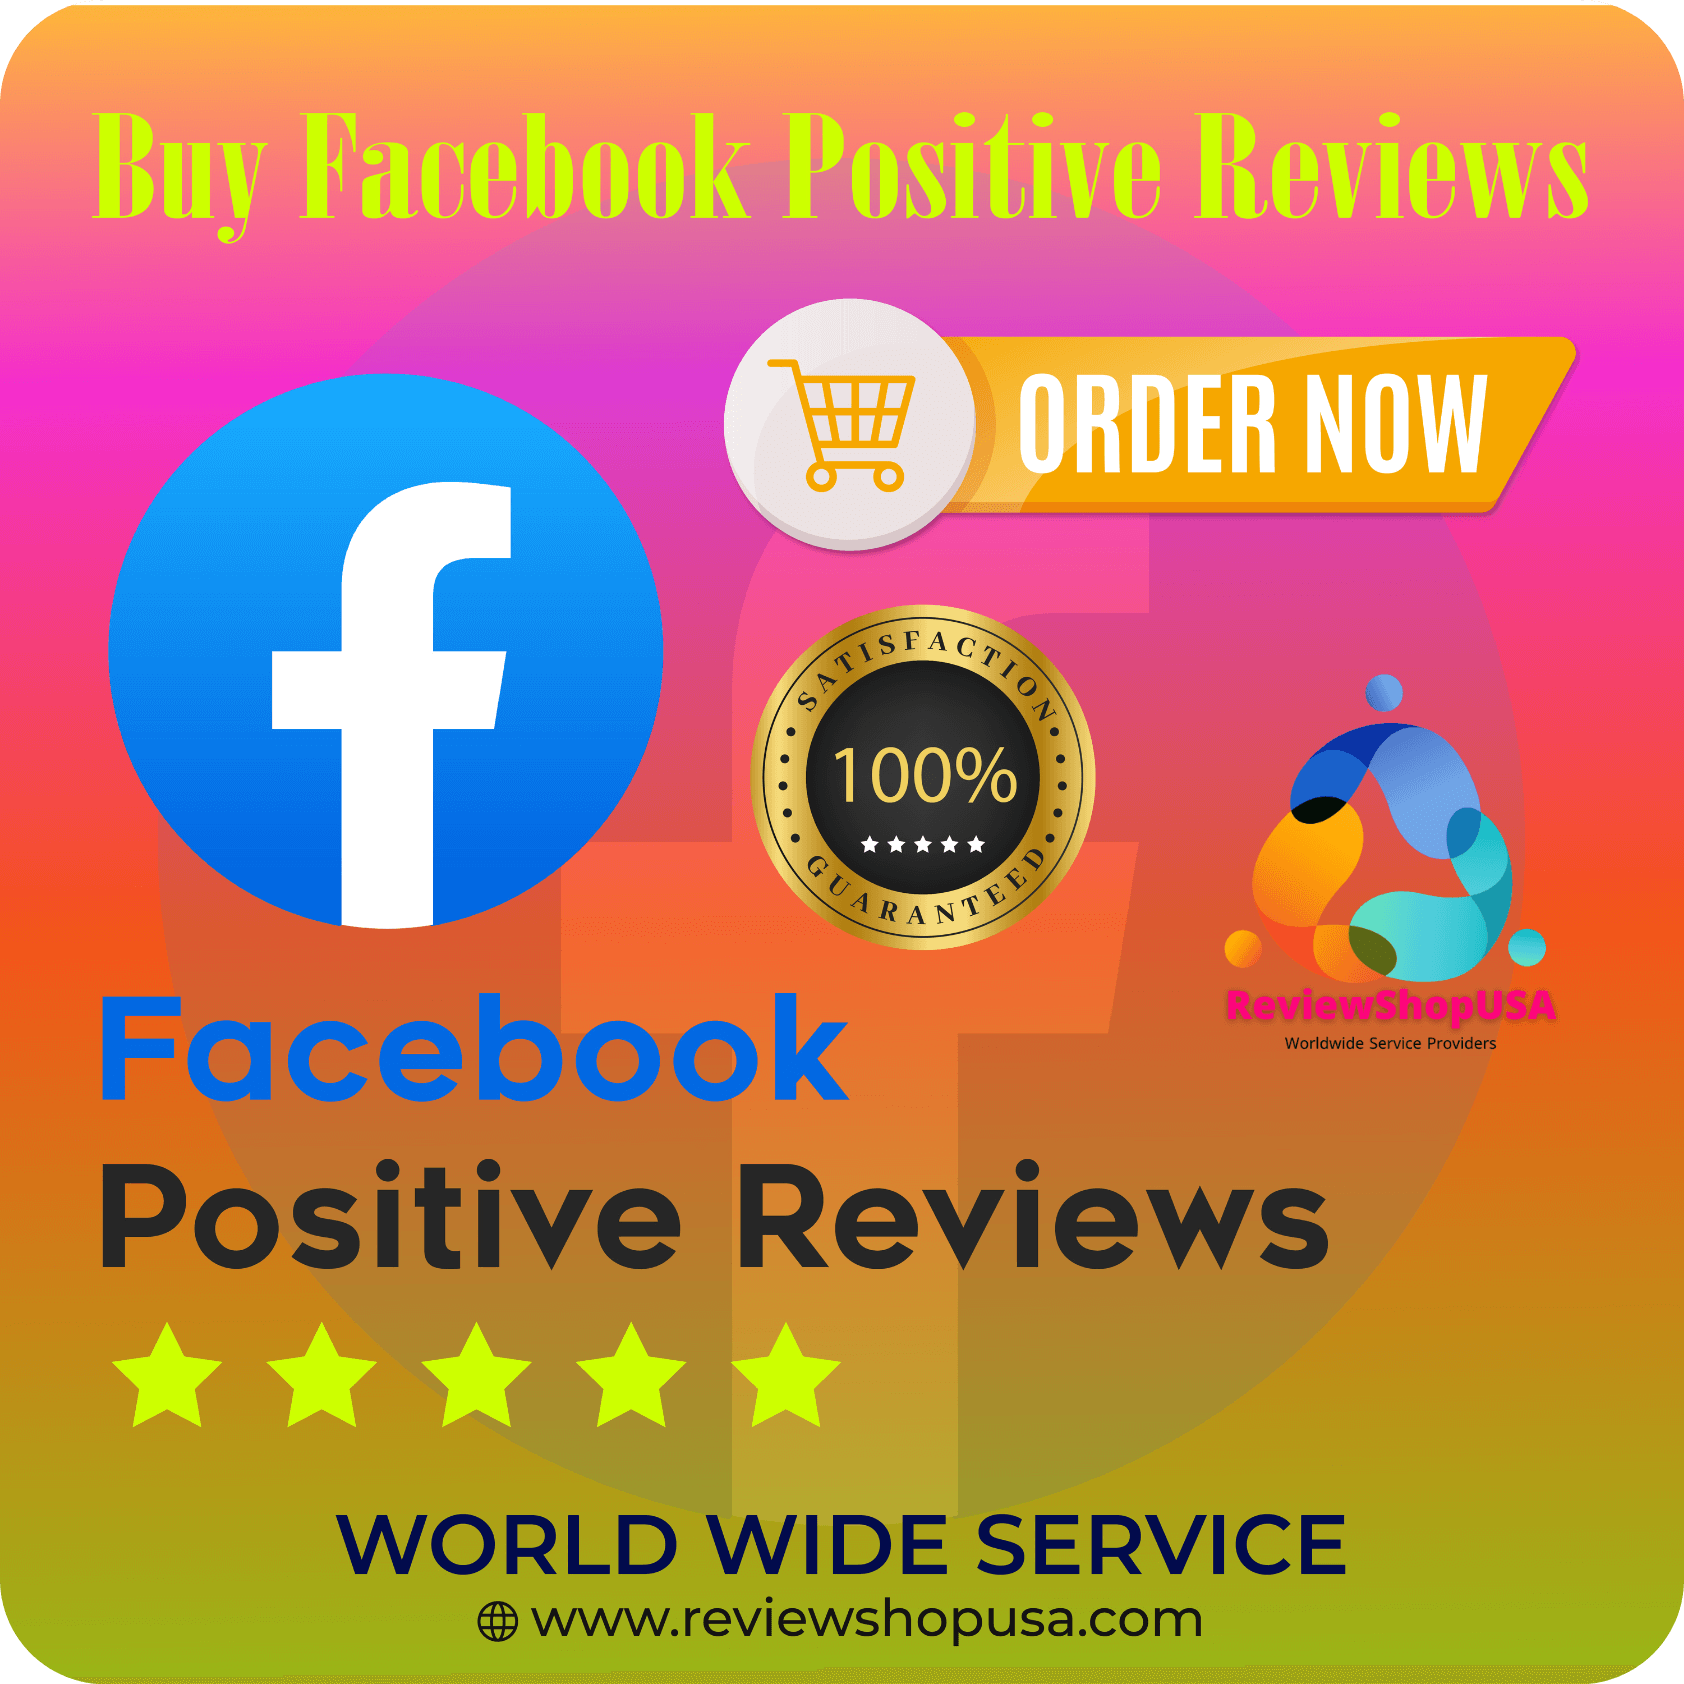 Buy Facebook Positive Reviews - 100% Permanent FB Reviews...